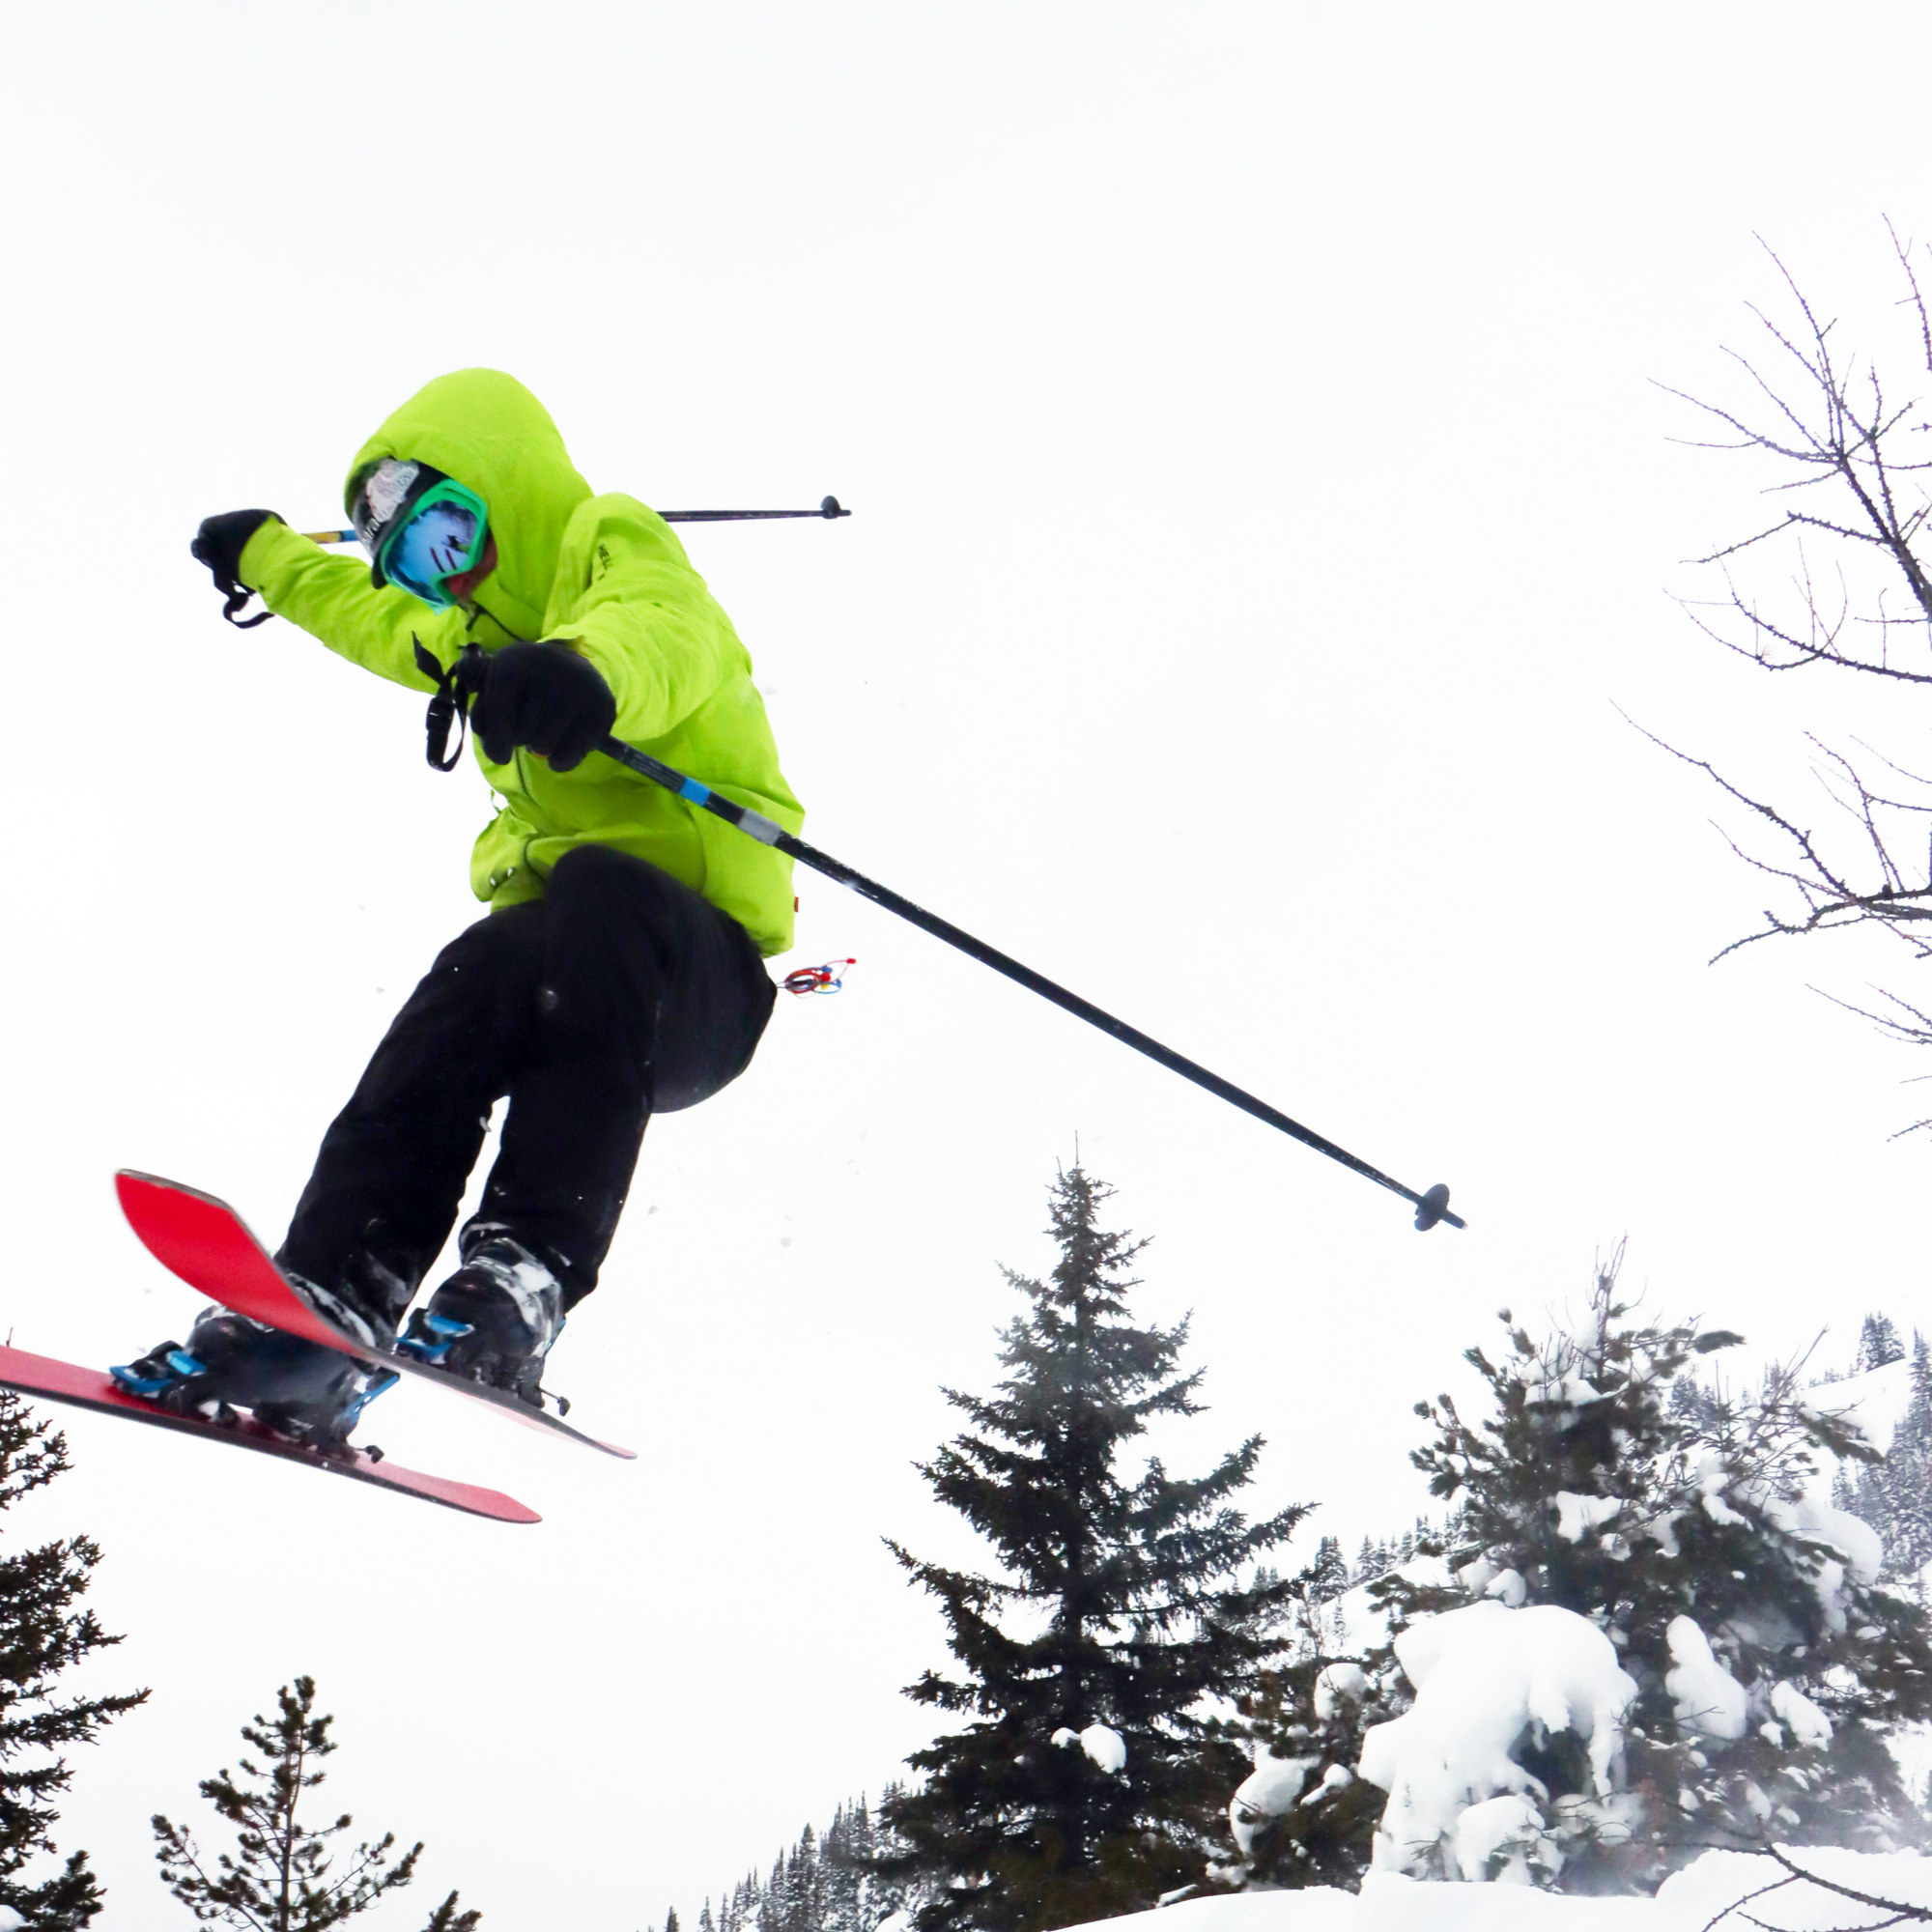 Choosing The Right Ski Bindings